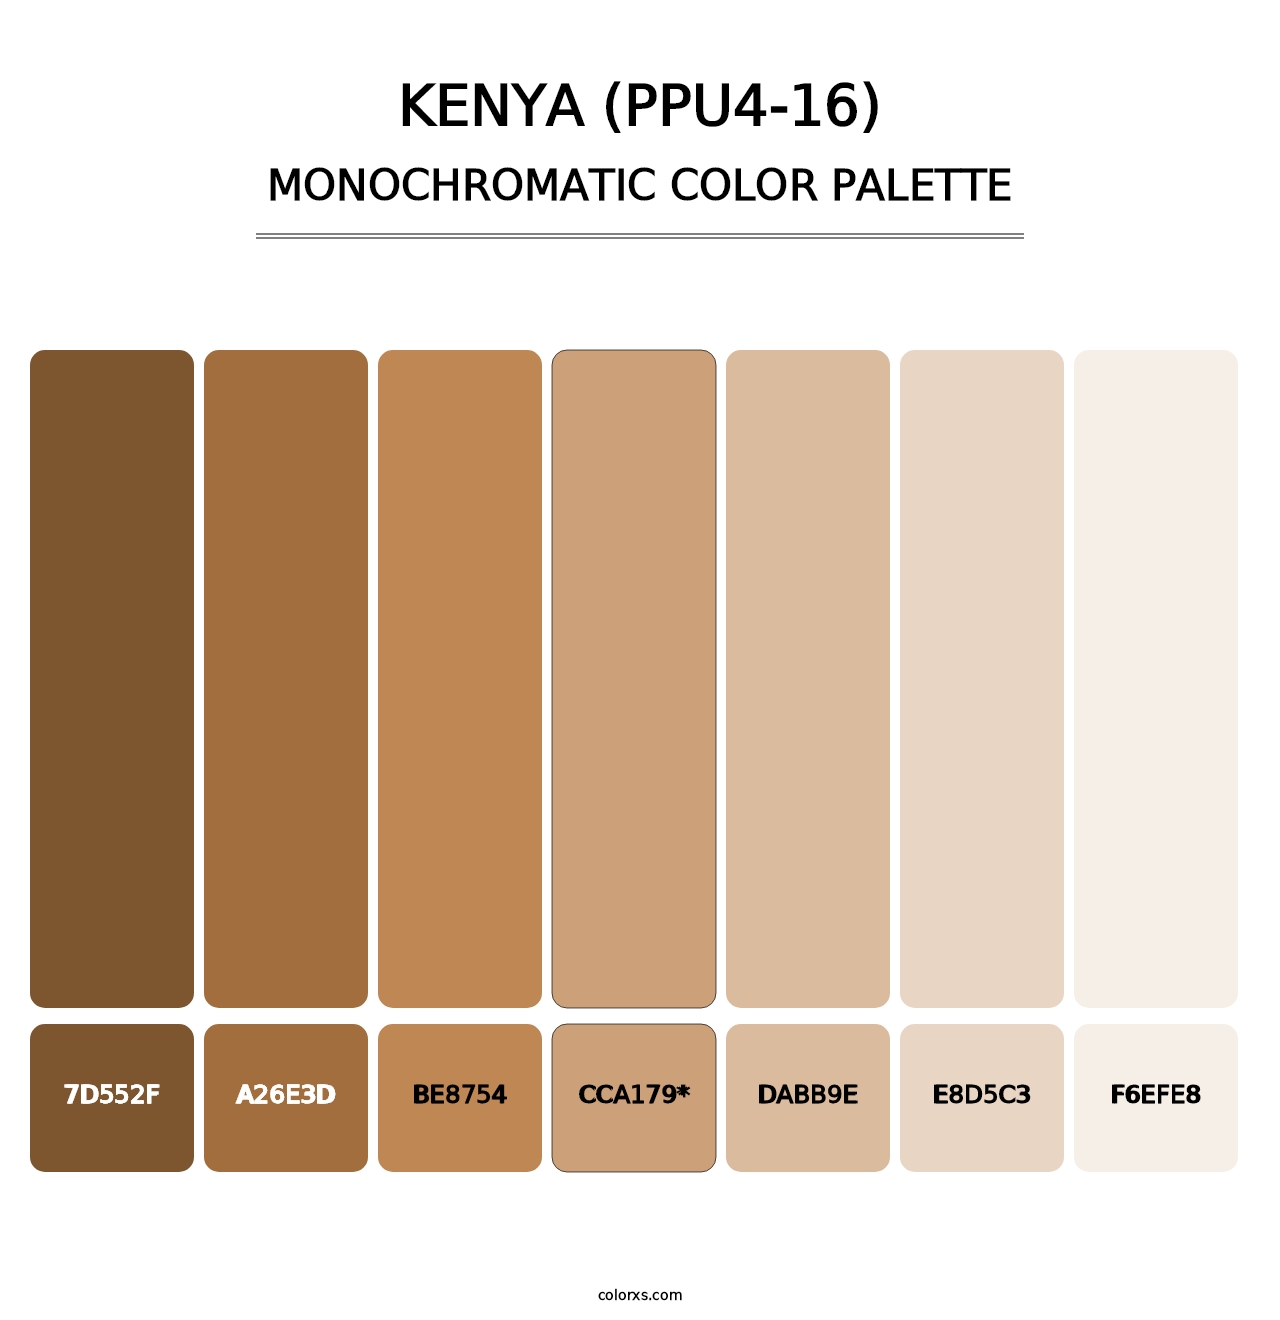 Kenya (PPU4-16) - Monochromatic Color Palette